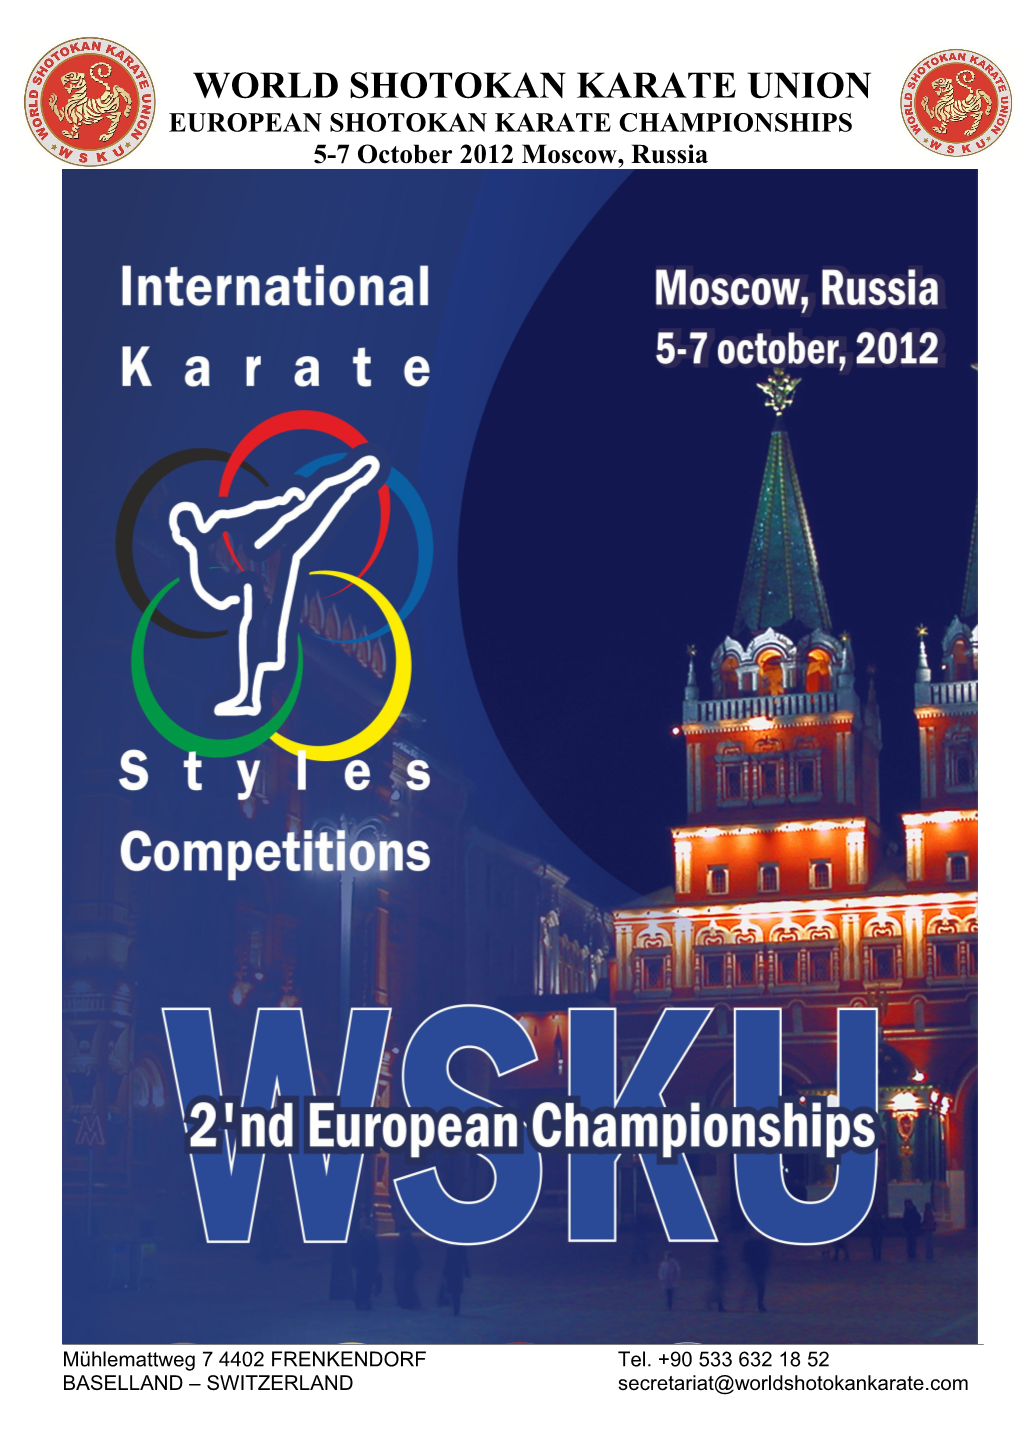 European Shotokan Karate Championships